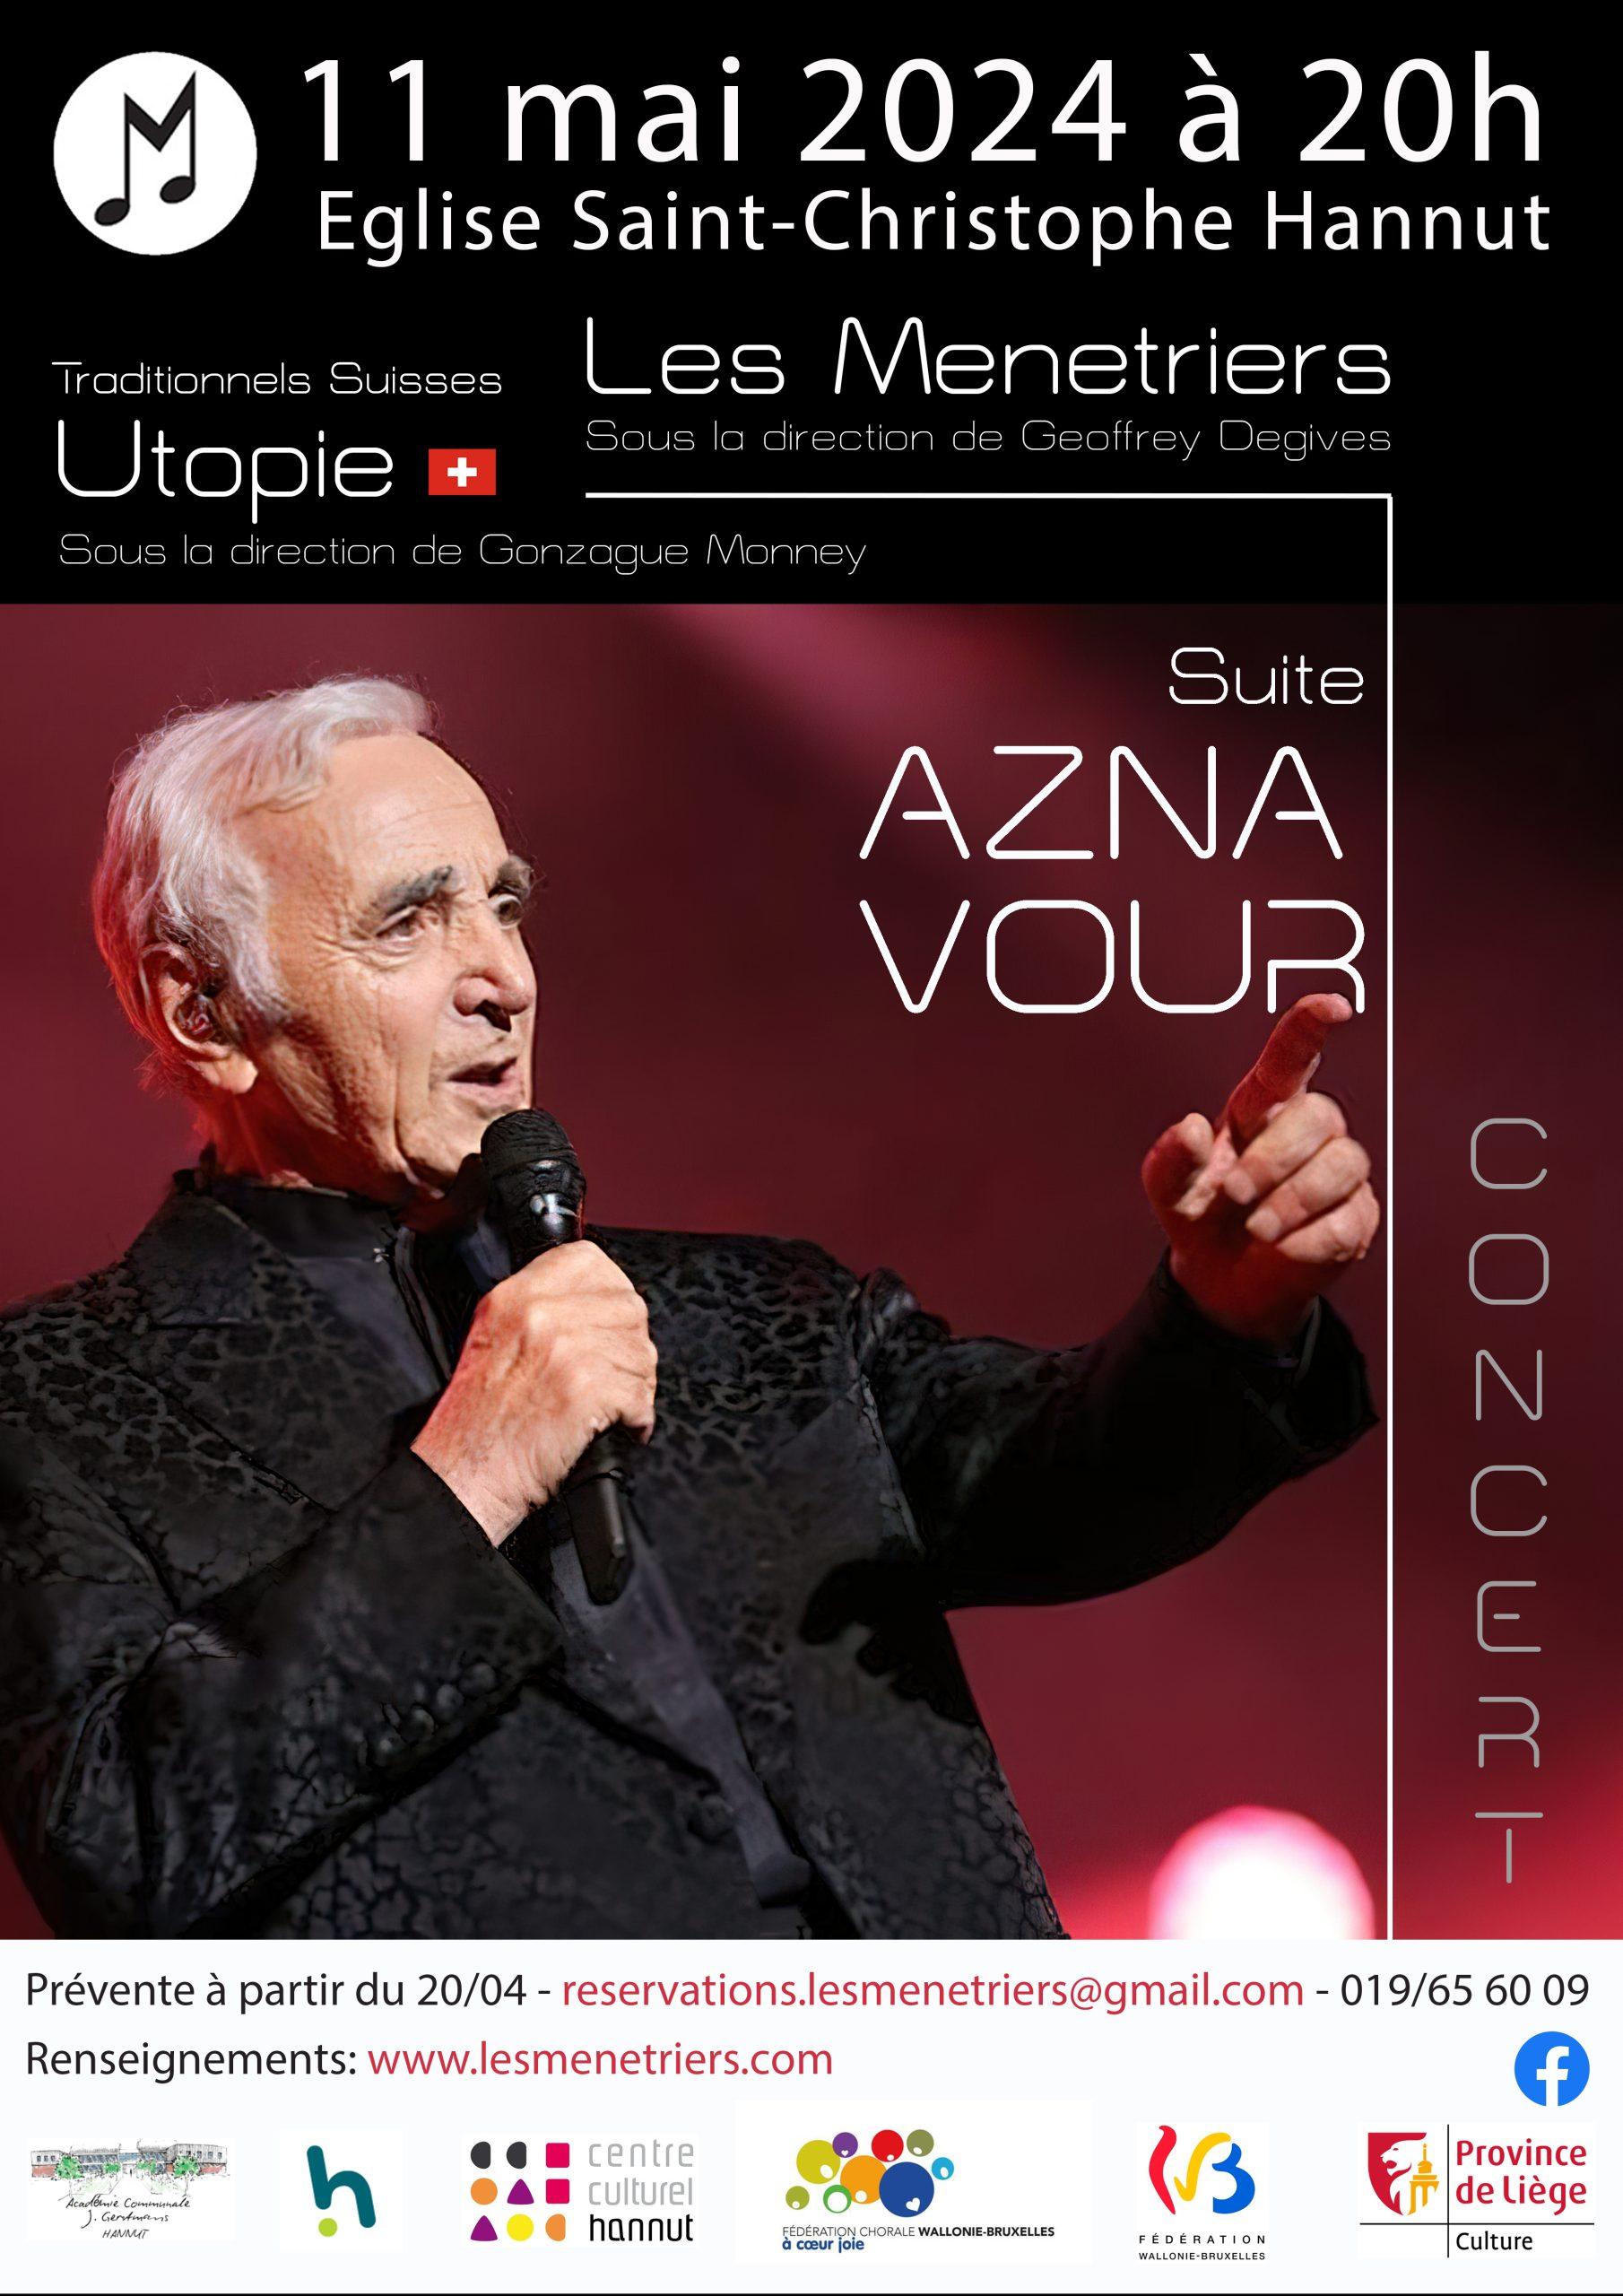 Concert Aznavour